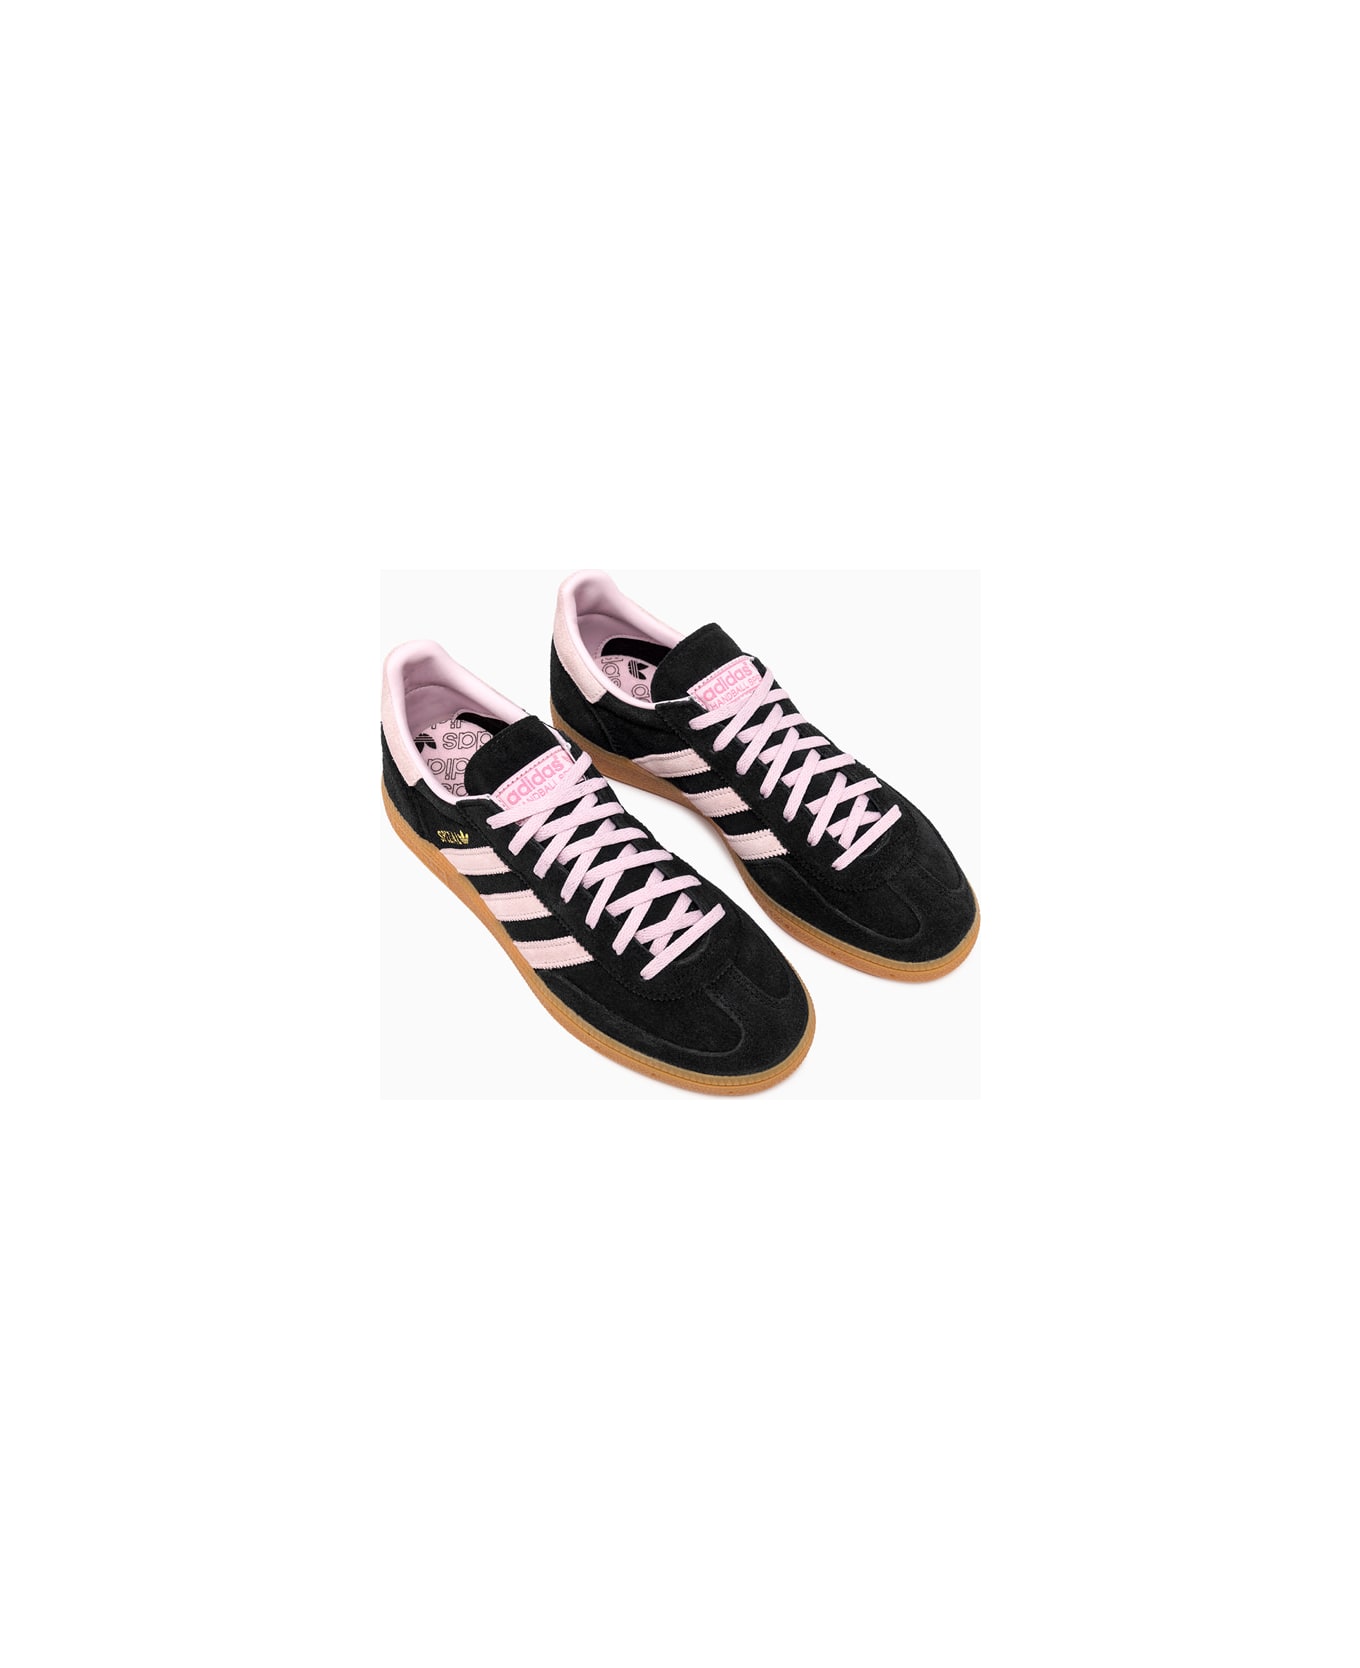 Adidas Originals Handball Spezial (w) Sneakers Ie5897 スニーカー